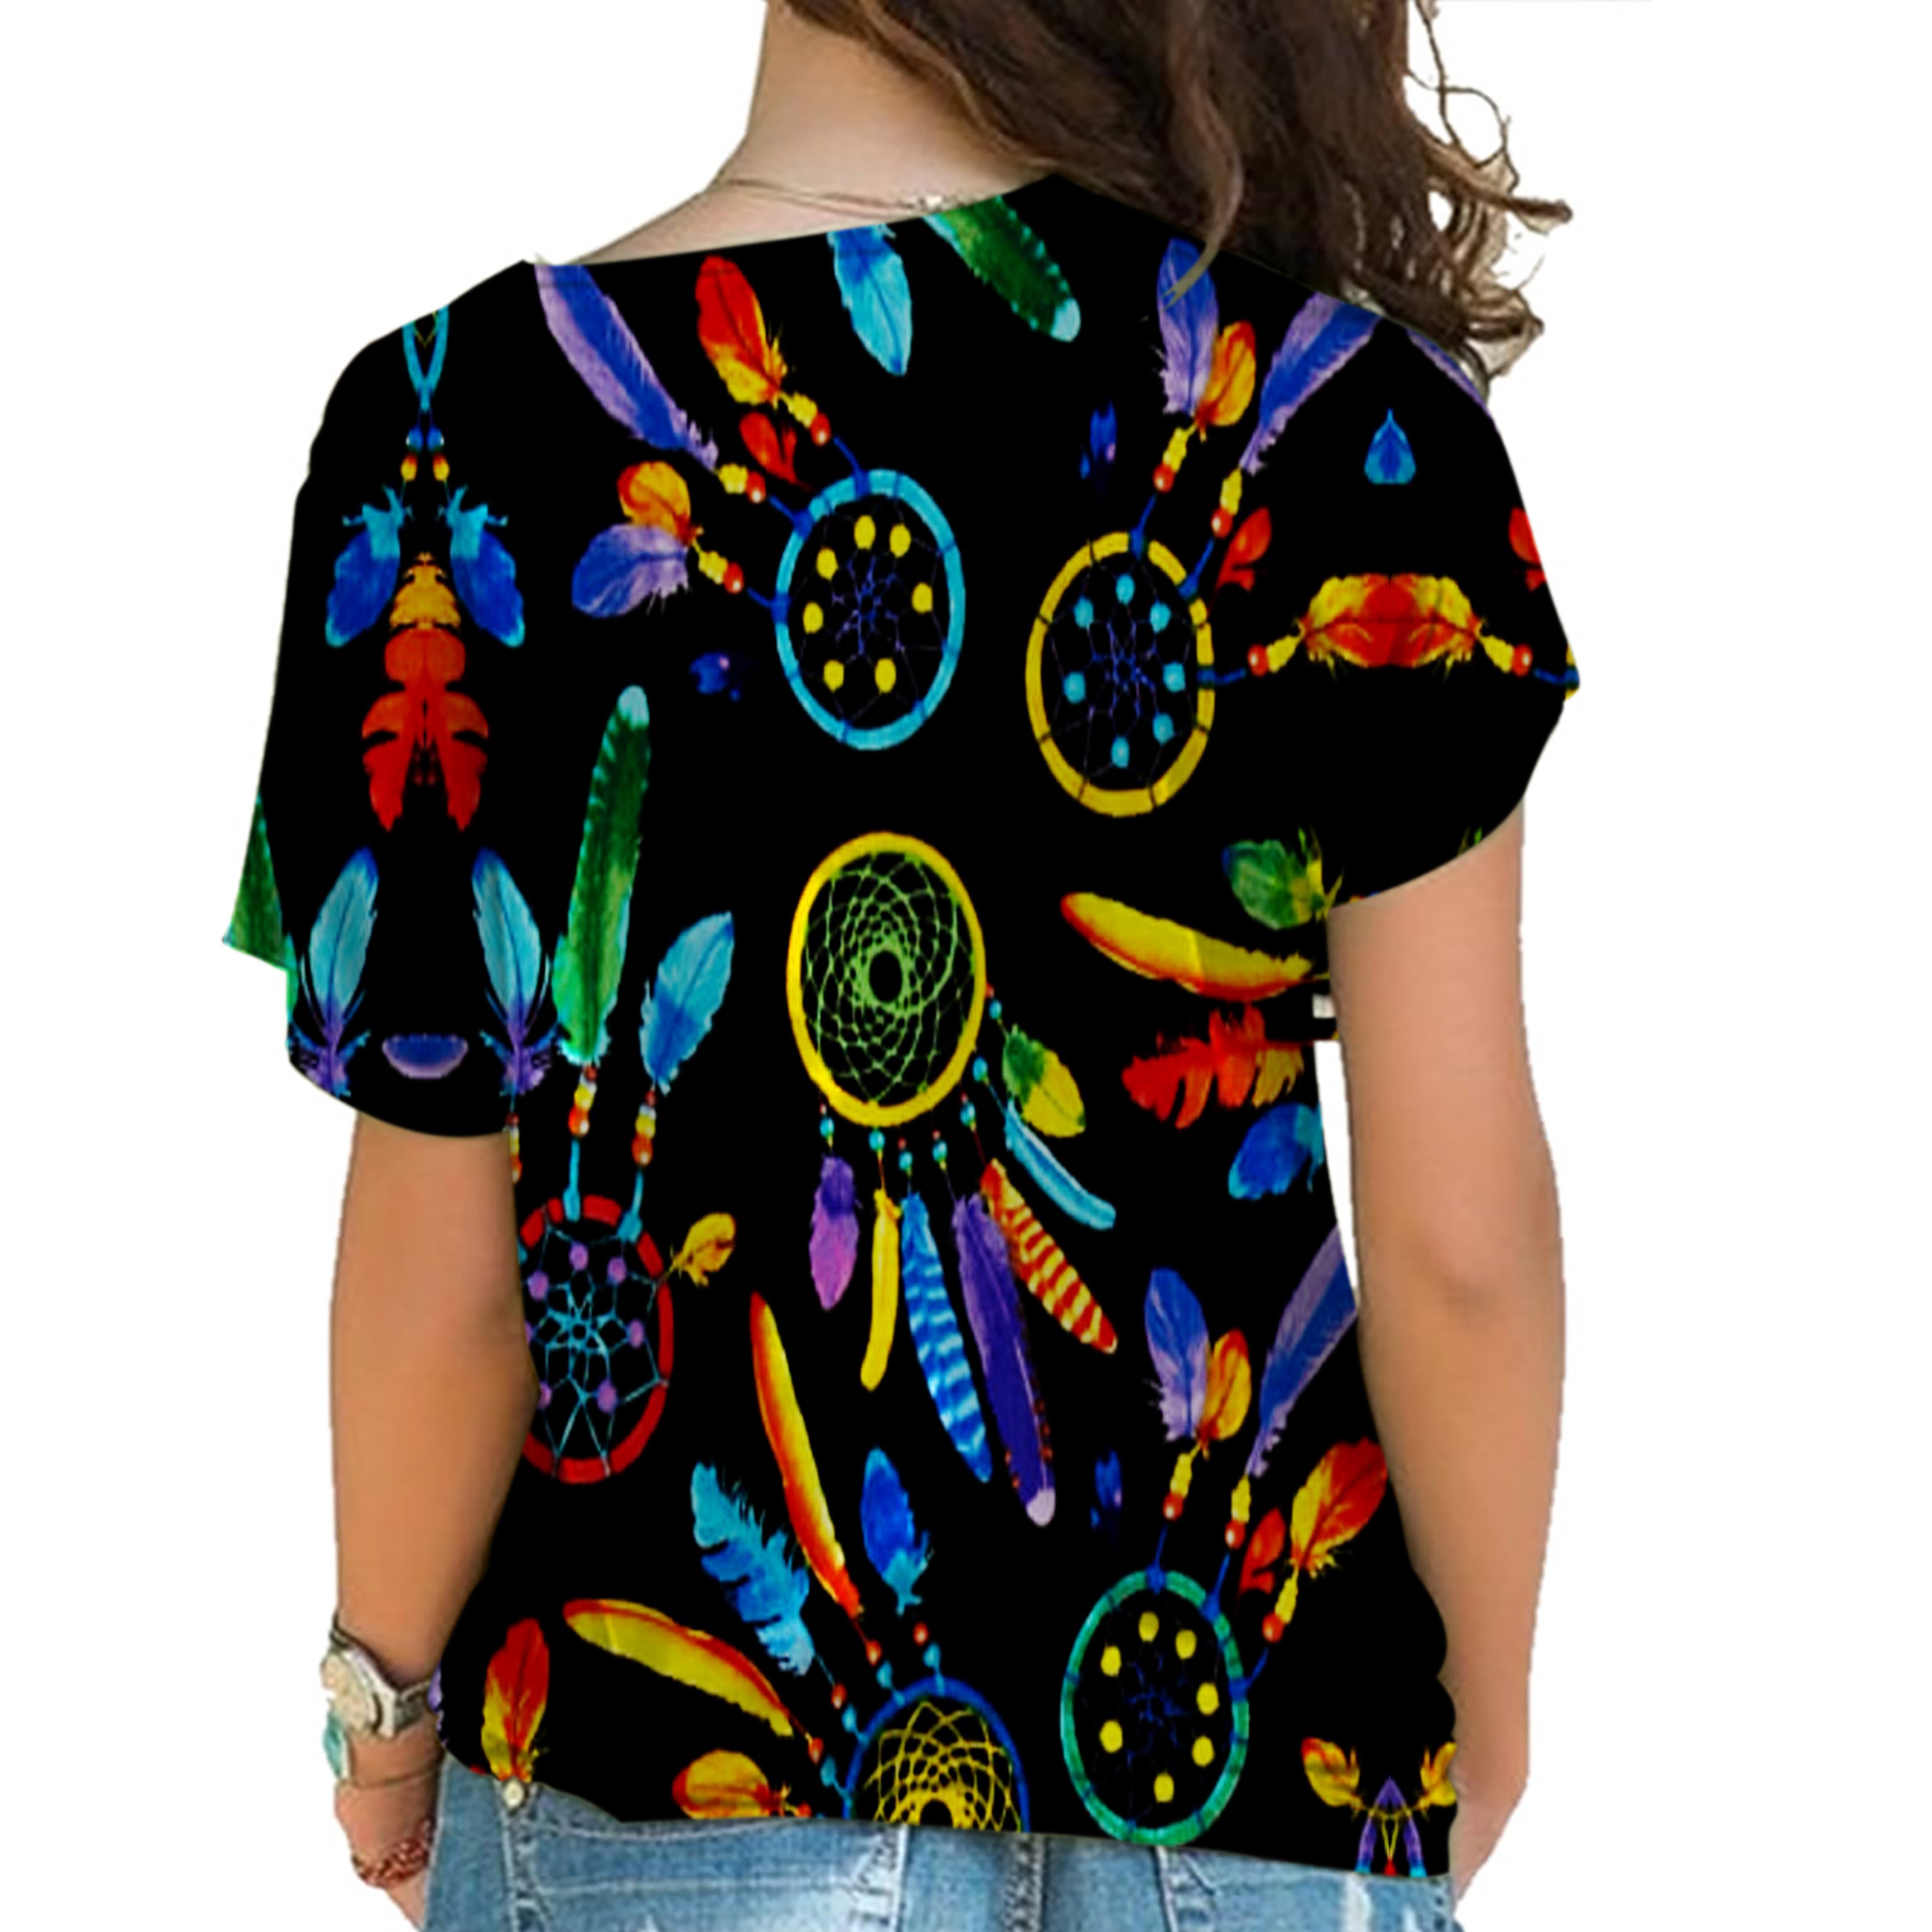 Powwow Store native american cross shoulder shirt 116